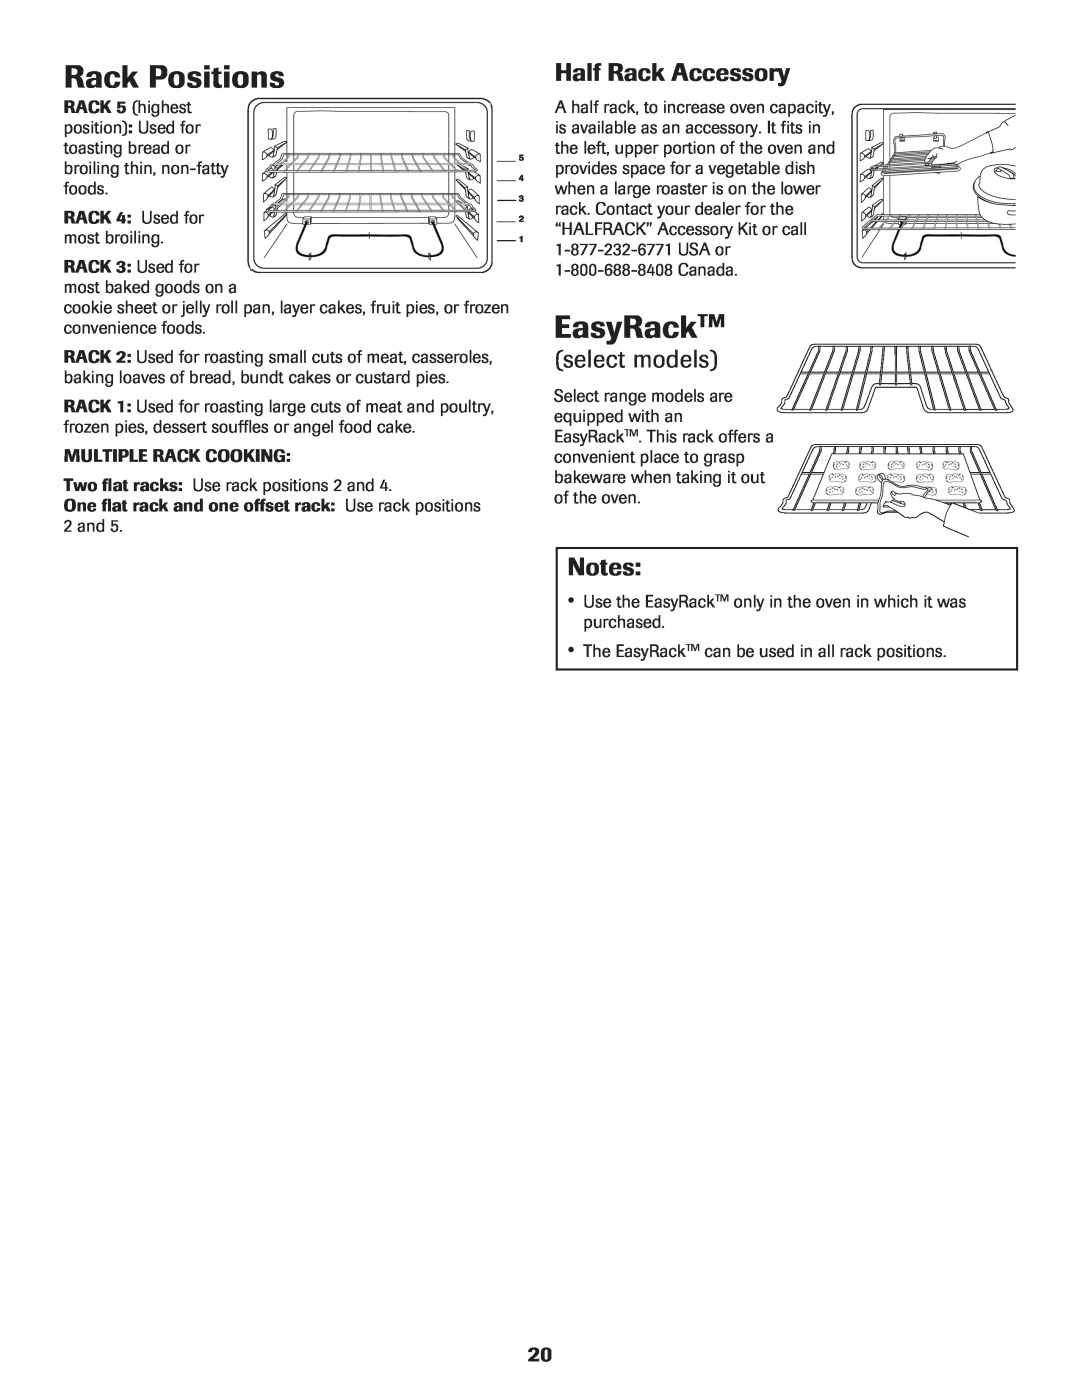 Amana Electric Range - Coil manual Rack Positions, EasyRackTM, Half Rack Accessory, select models 